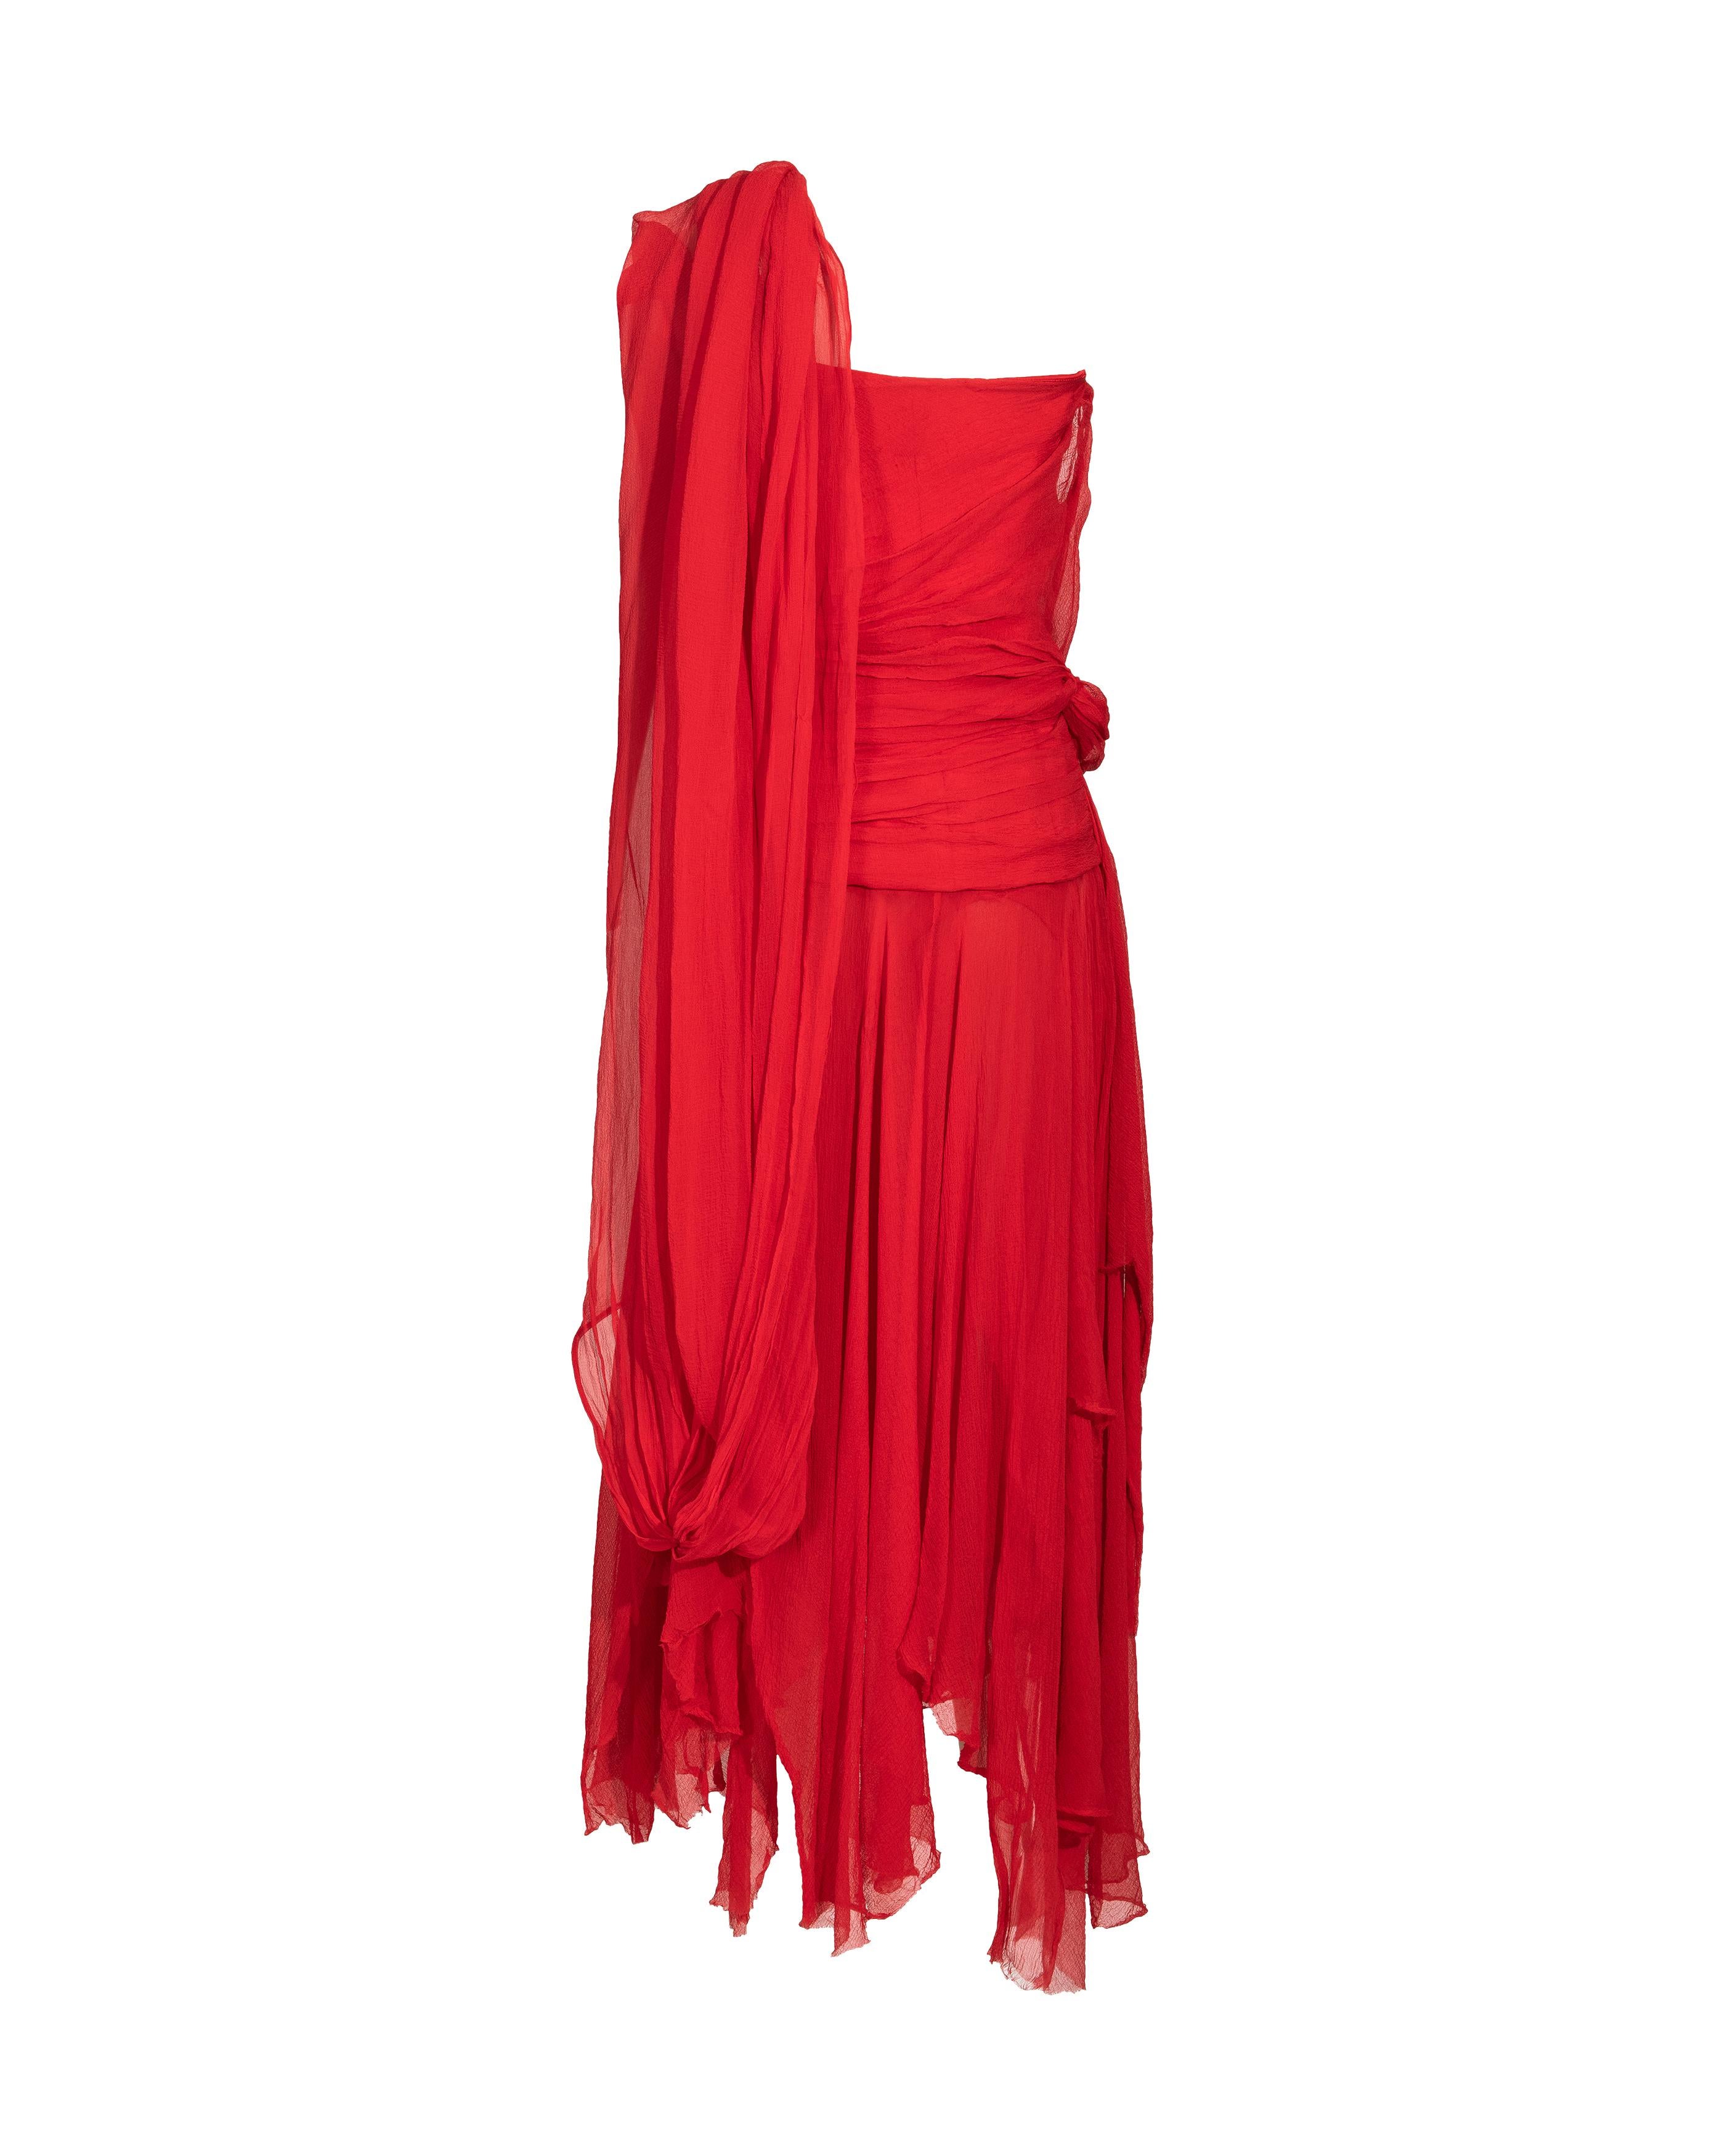 S/S 2003 Alexander McQueen  The Collective Robe en mousseline de soie rouge avec ceinture 11